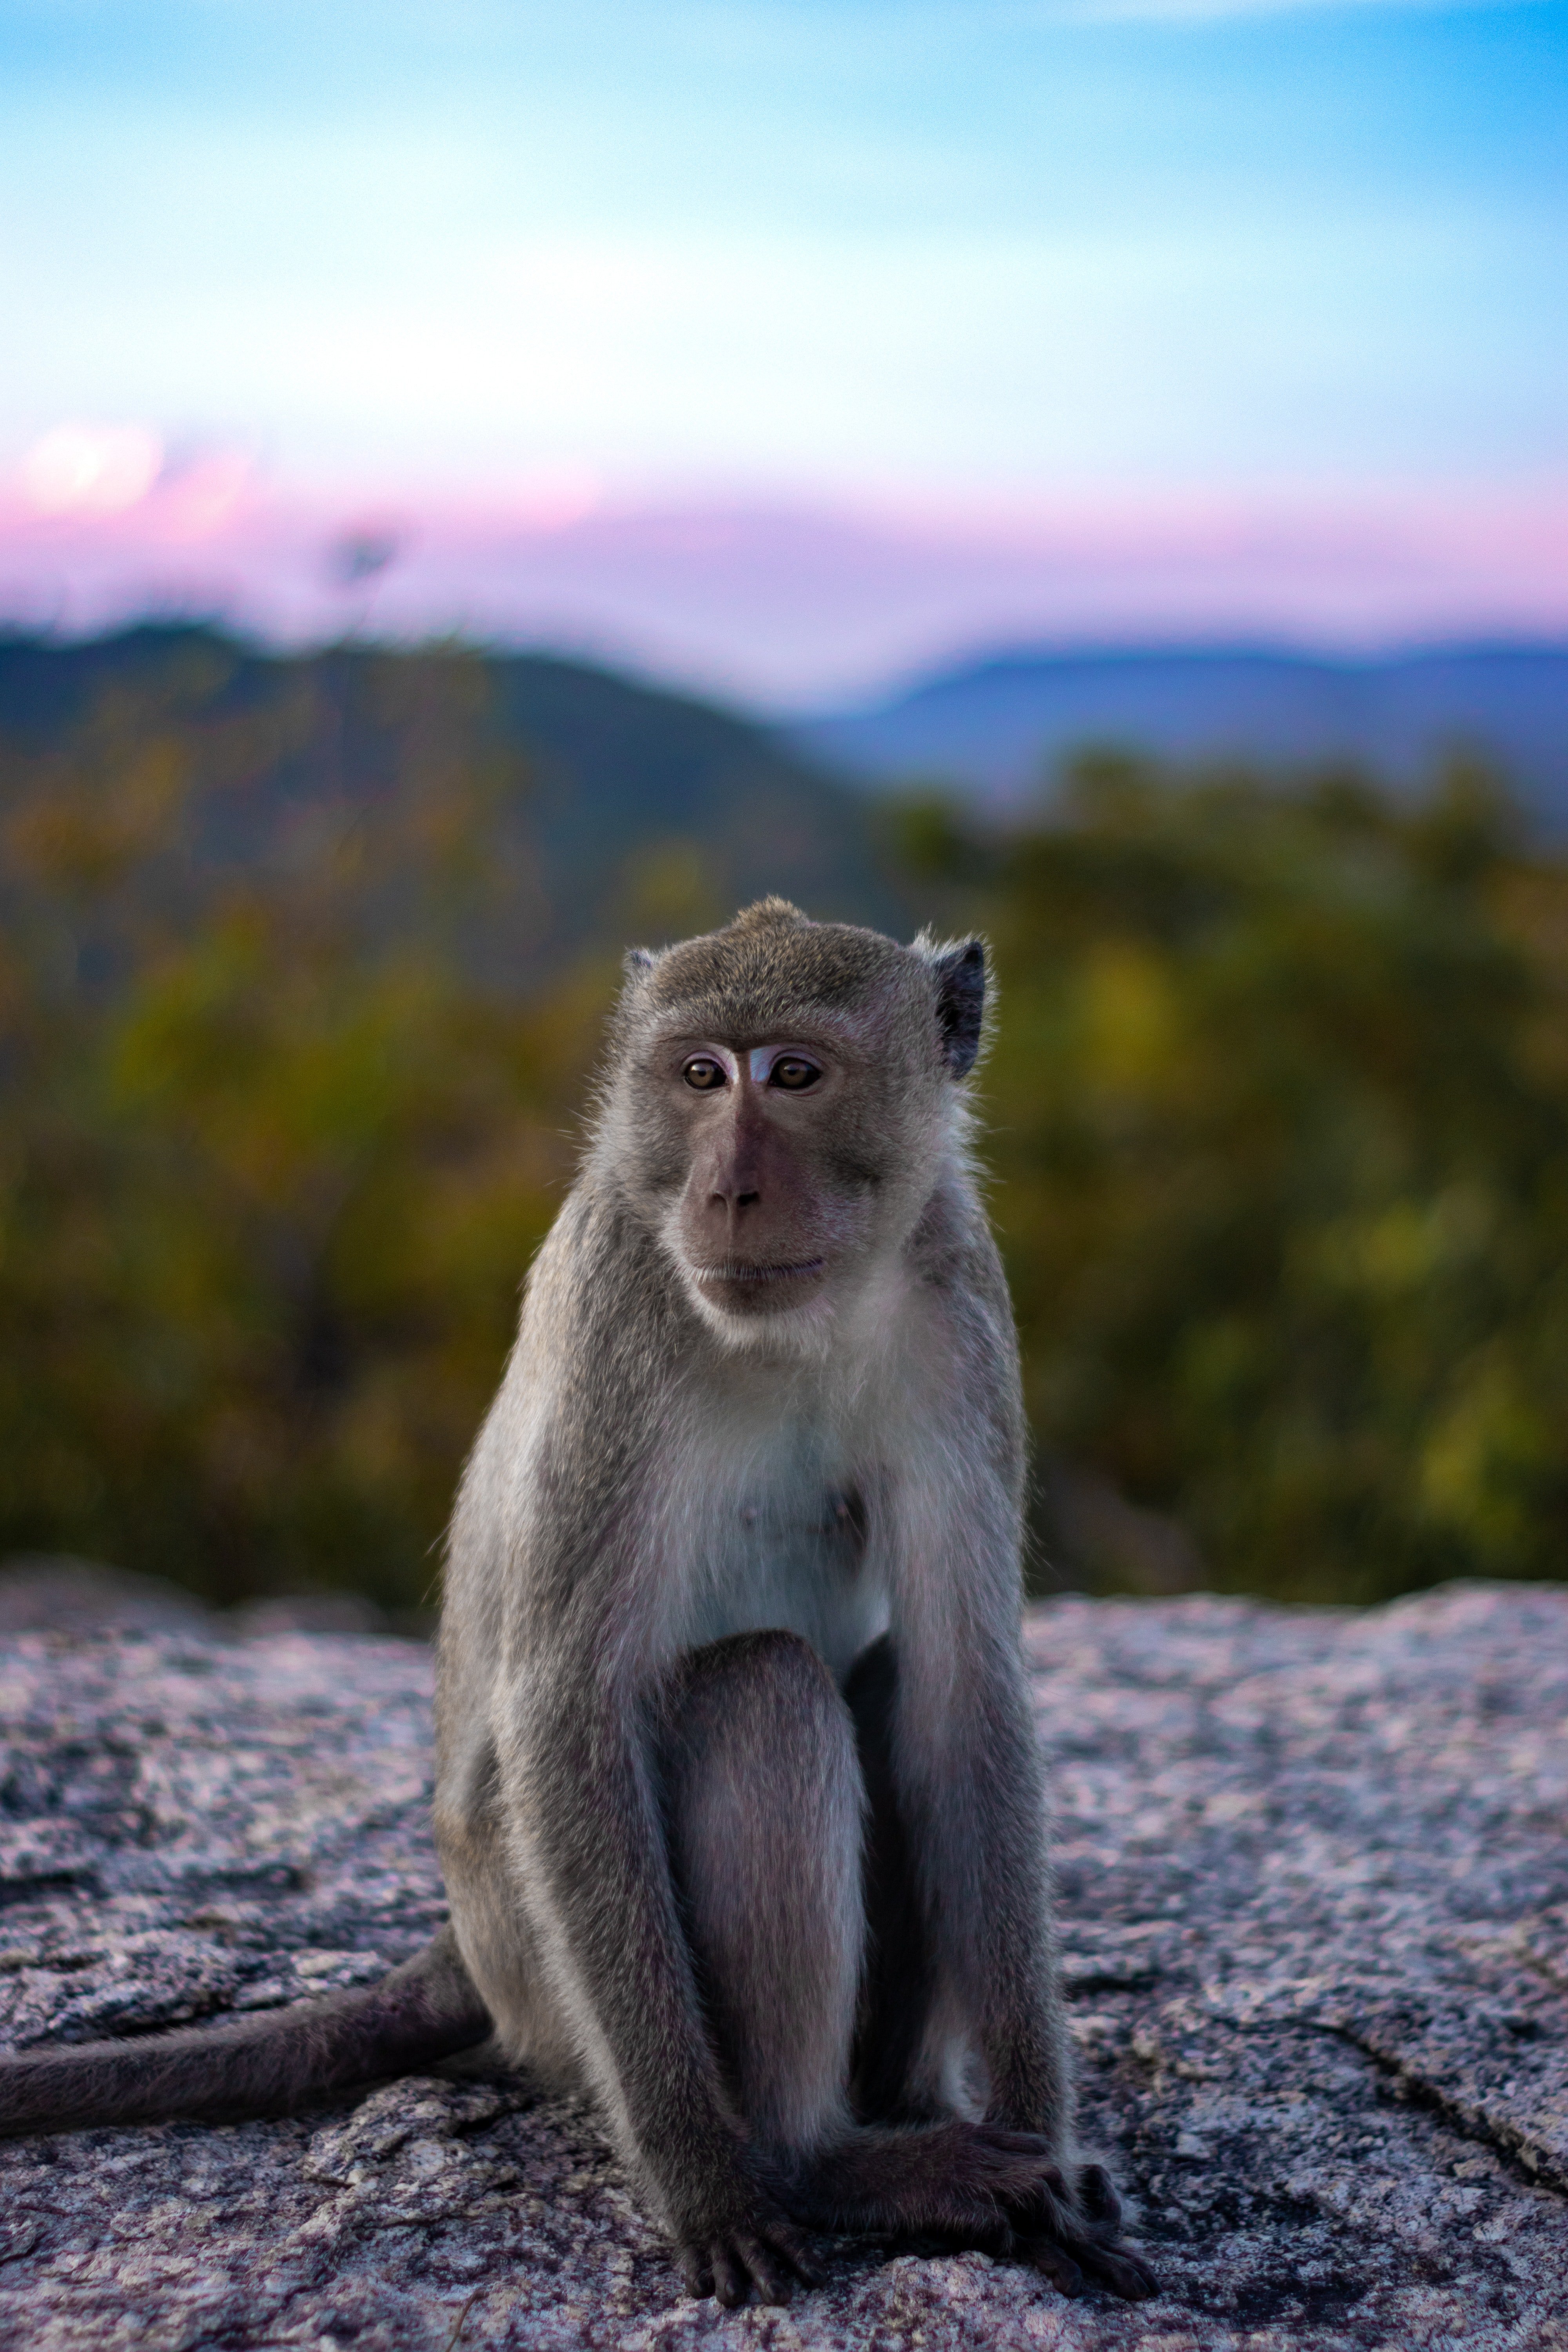 A monkey seated on a rock. | Photo: Pexels/ Leonid Danilov